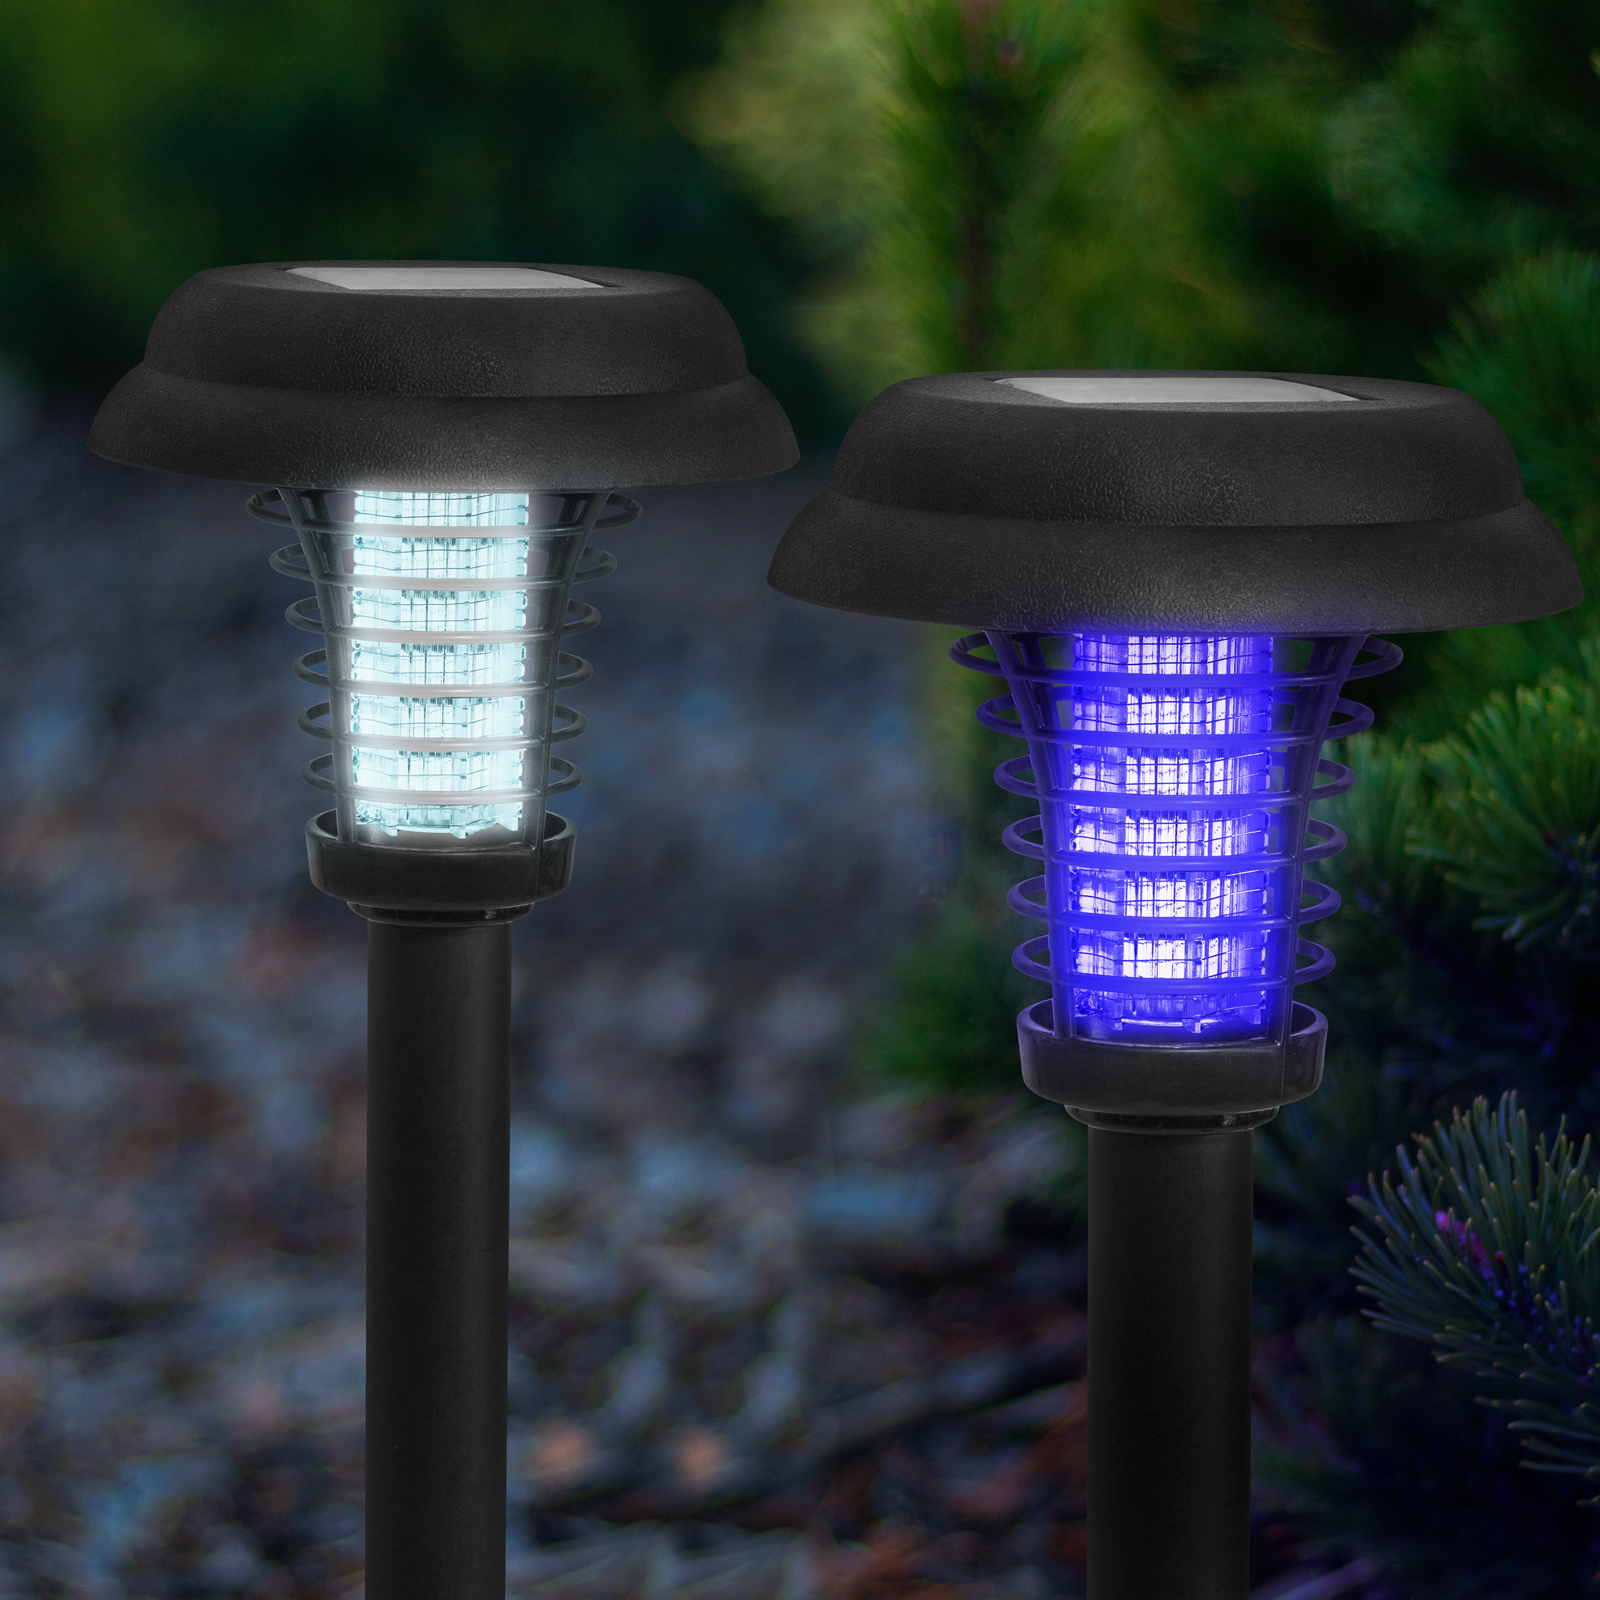 Capcana solara UV pentru insecte + functie lampa - cu tarus pentru fixare